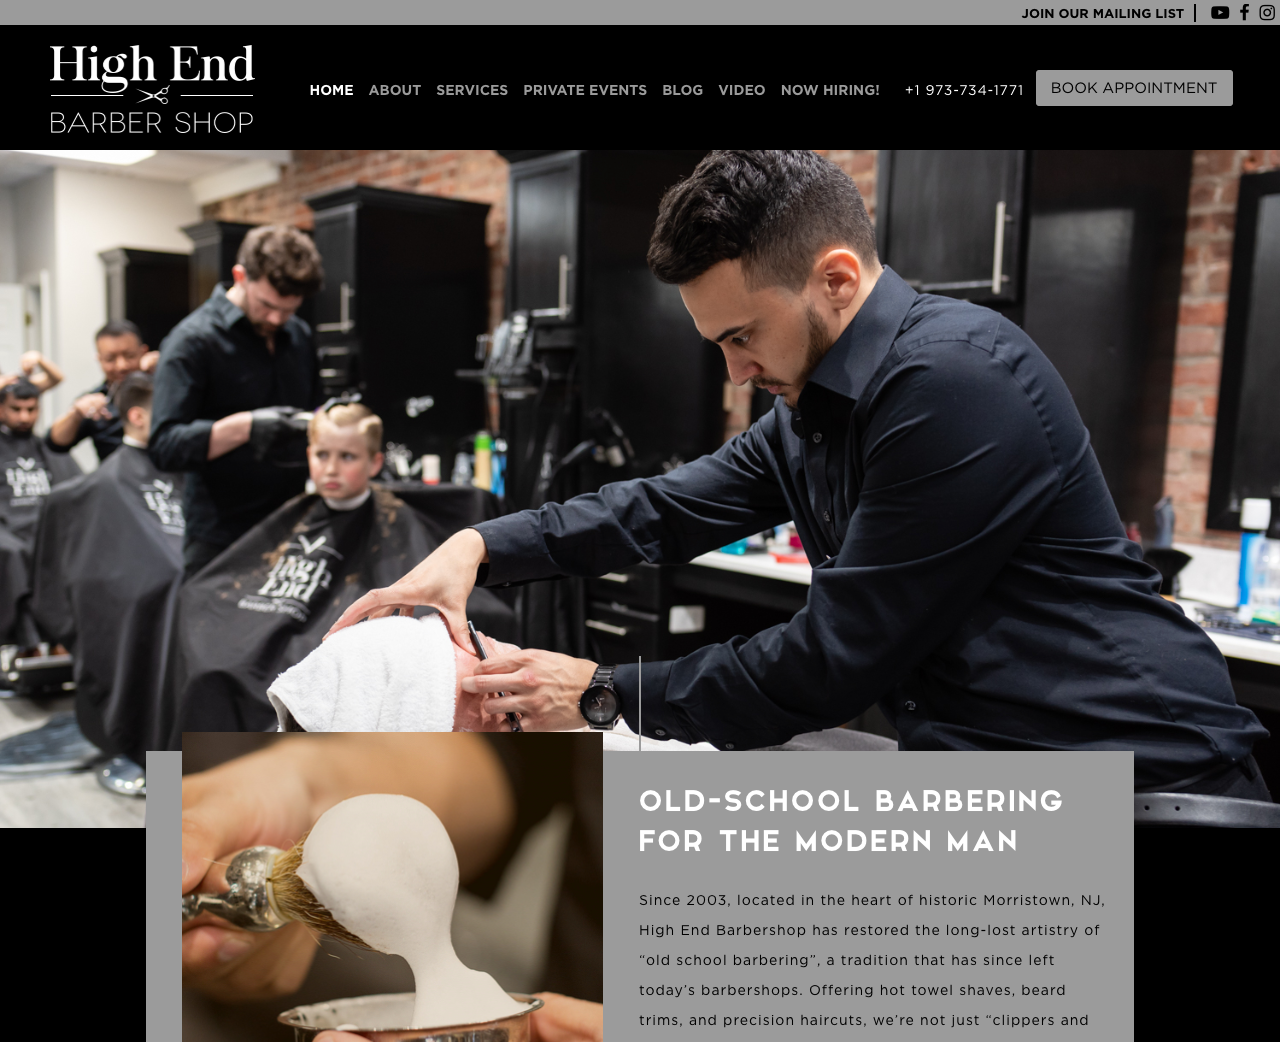 High End Barbershop Image